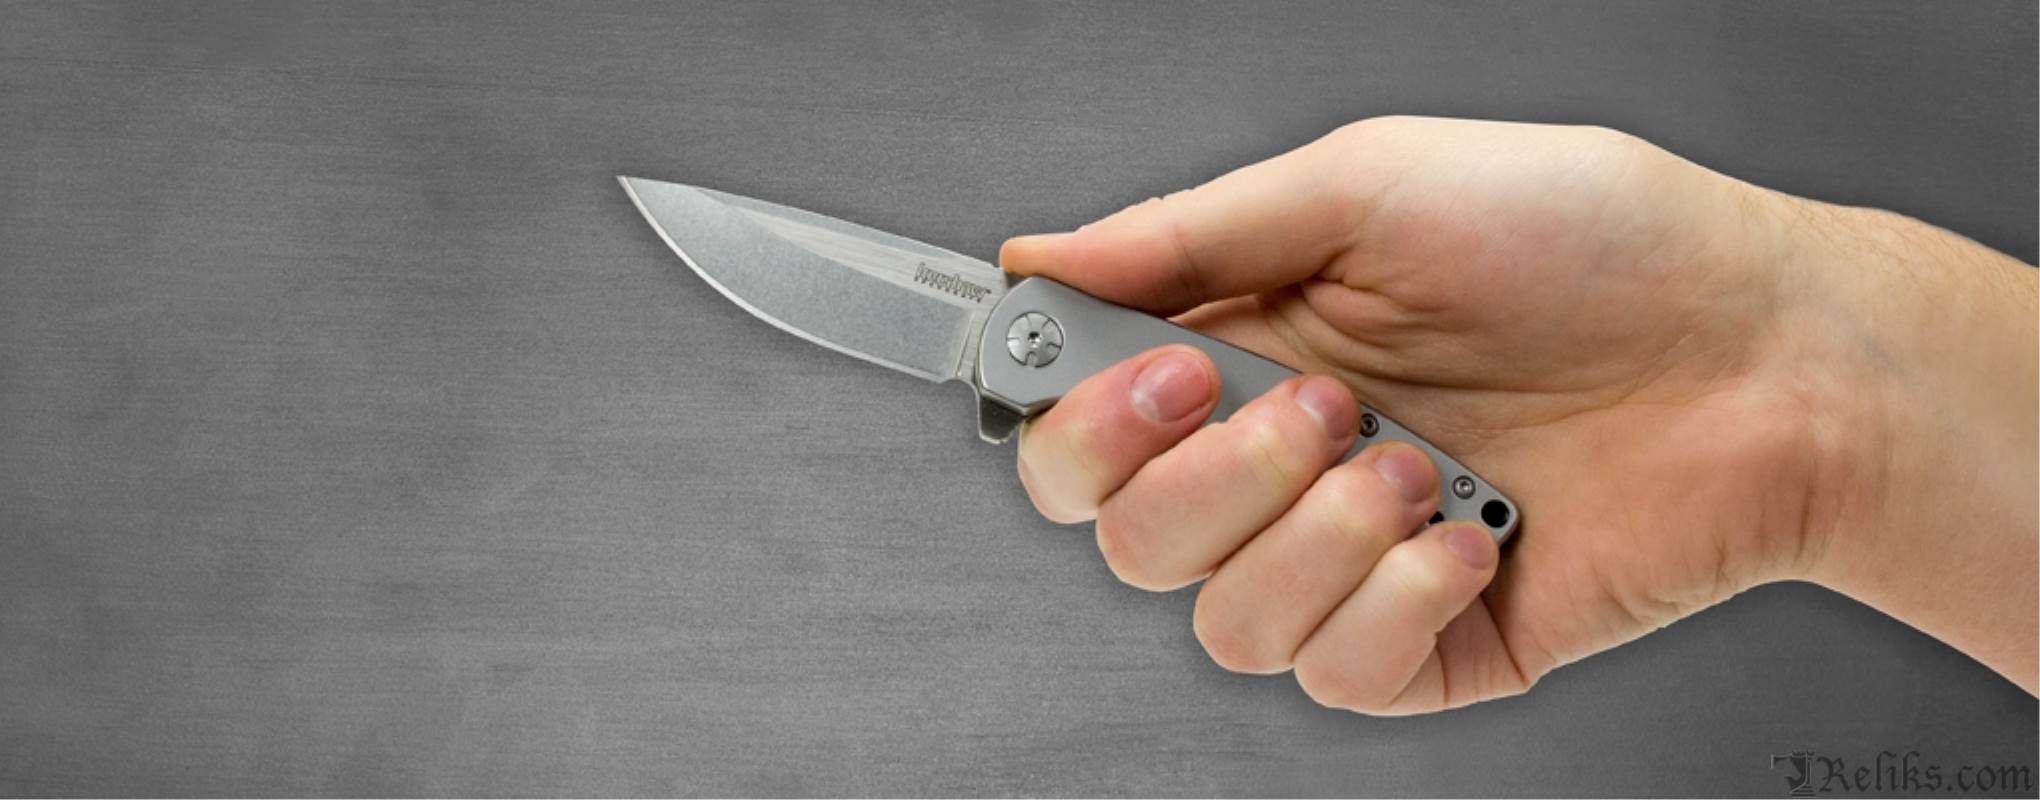 pico knife in hand